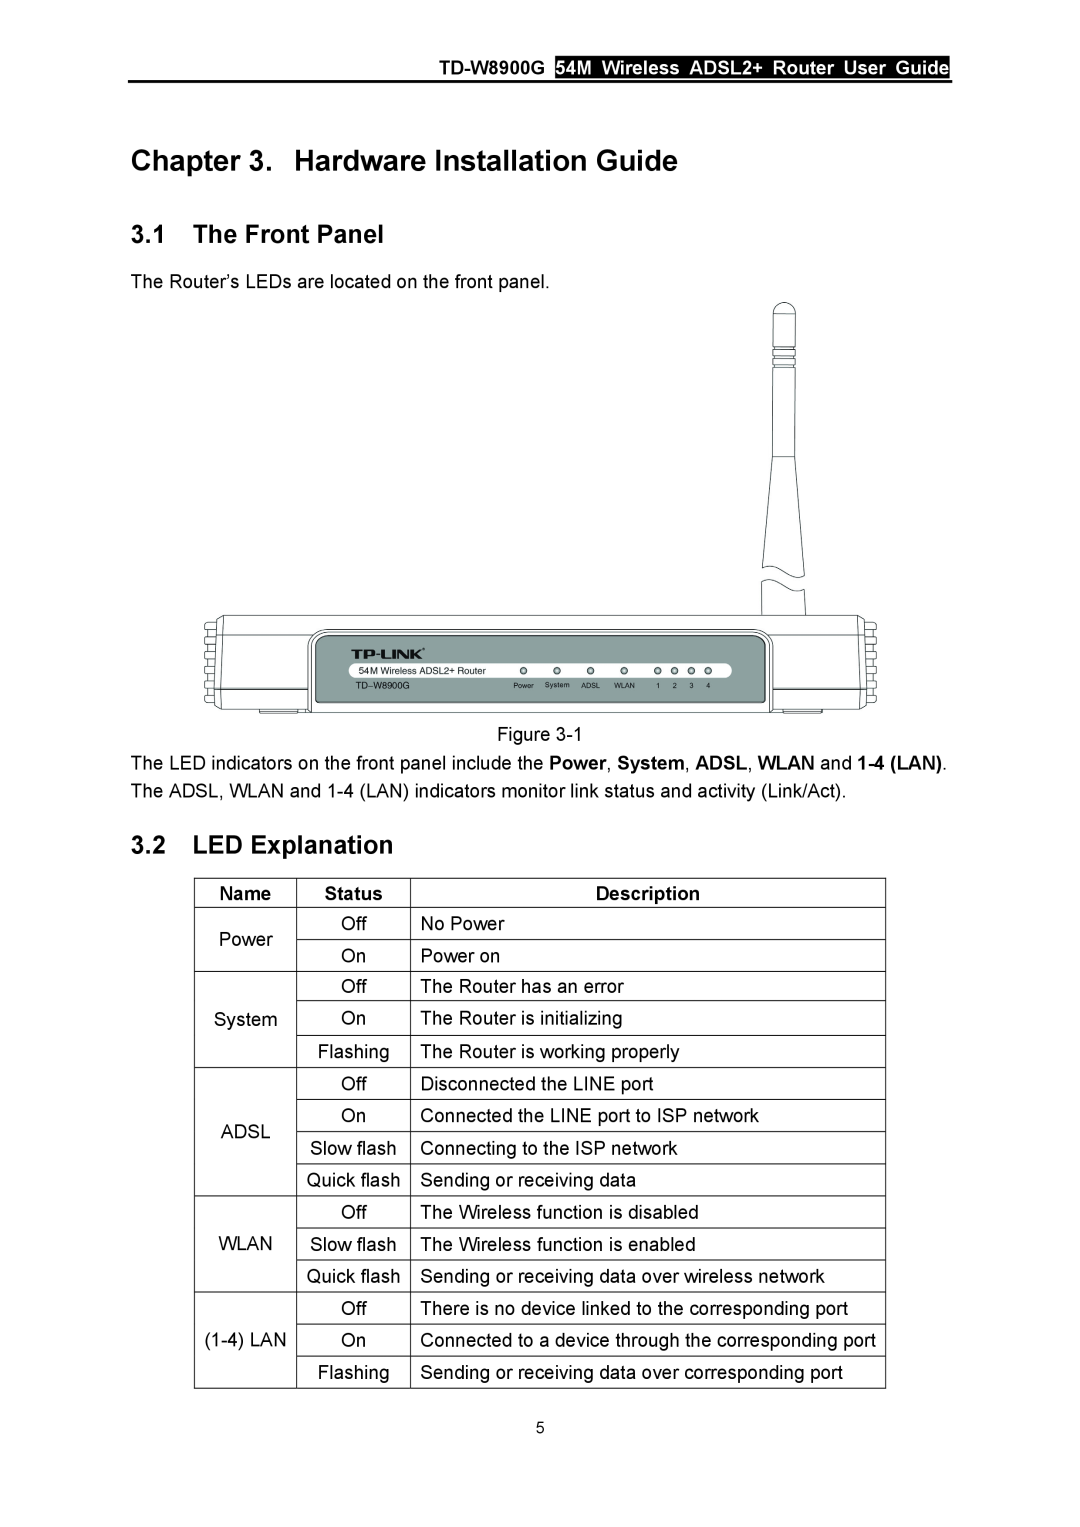 TP-Link TD-W8900G manual Hardware Installation Guide, The Front Panel, LED Explanation, Name, Status, Description 